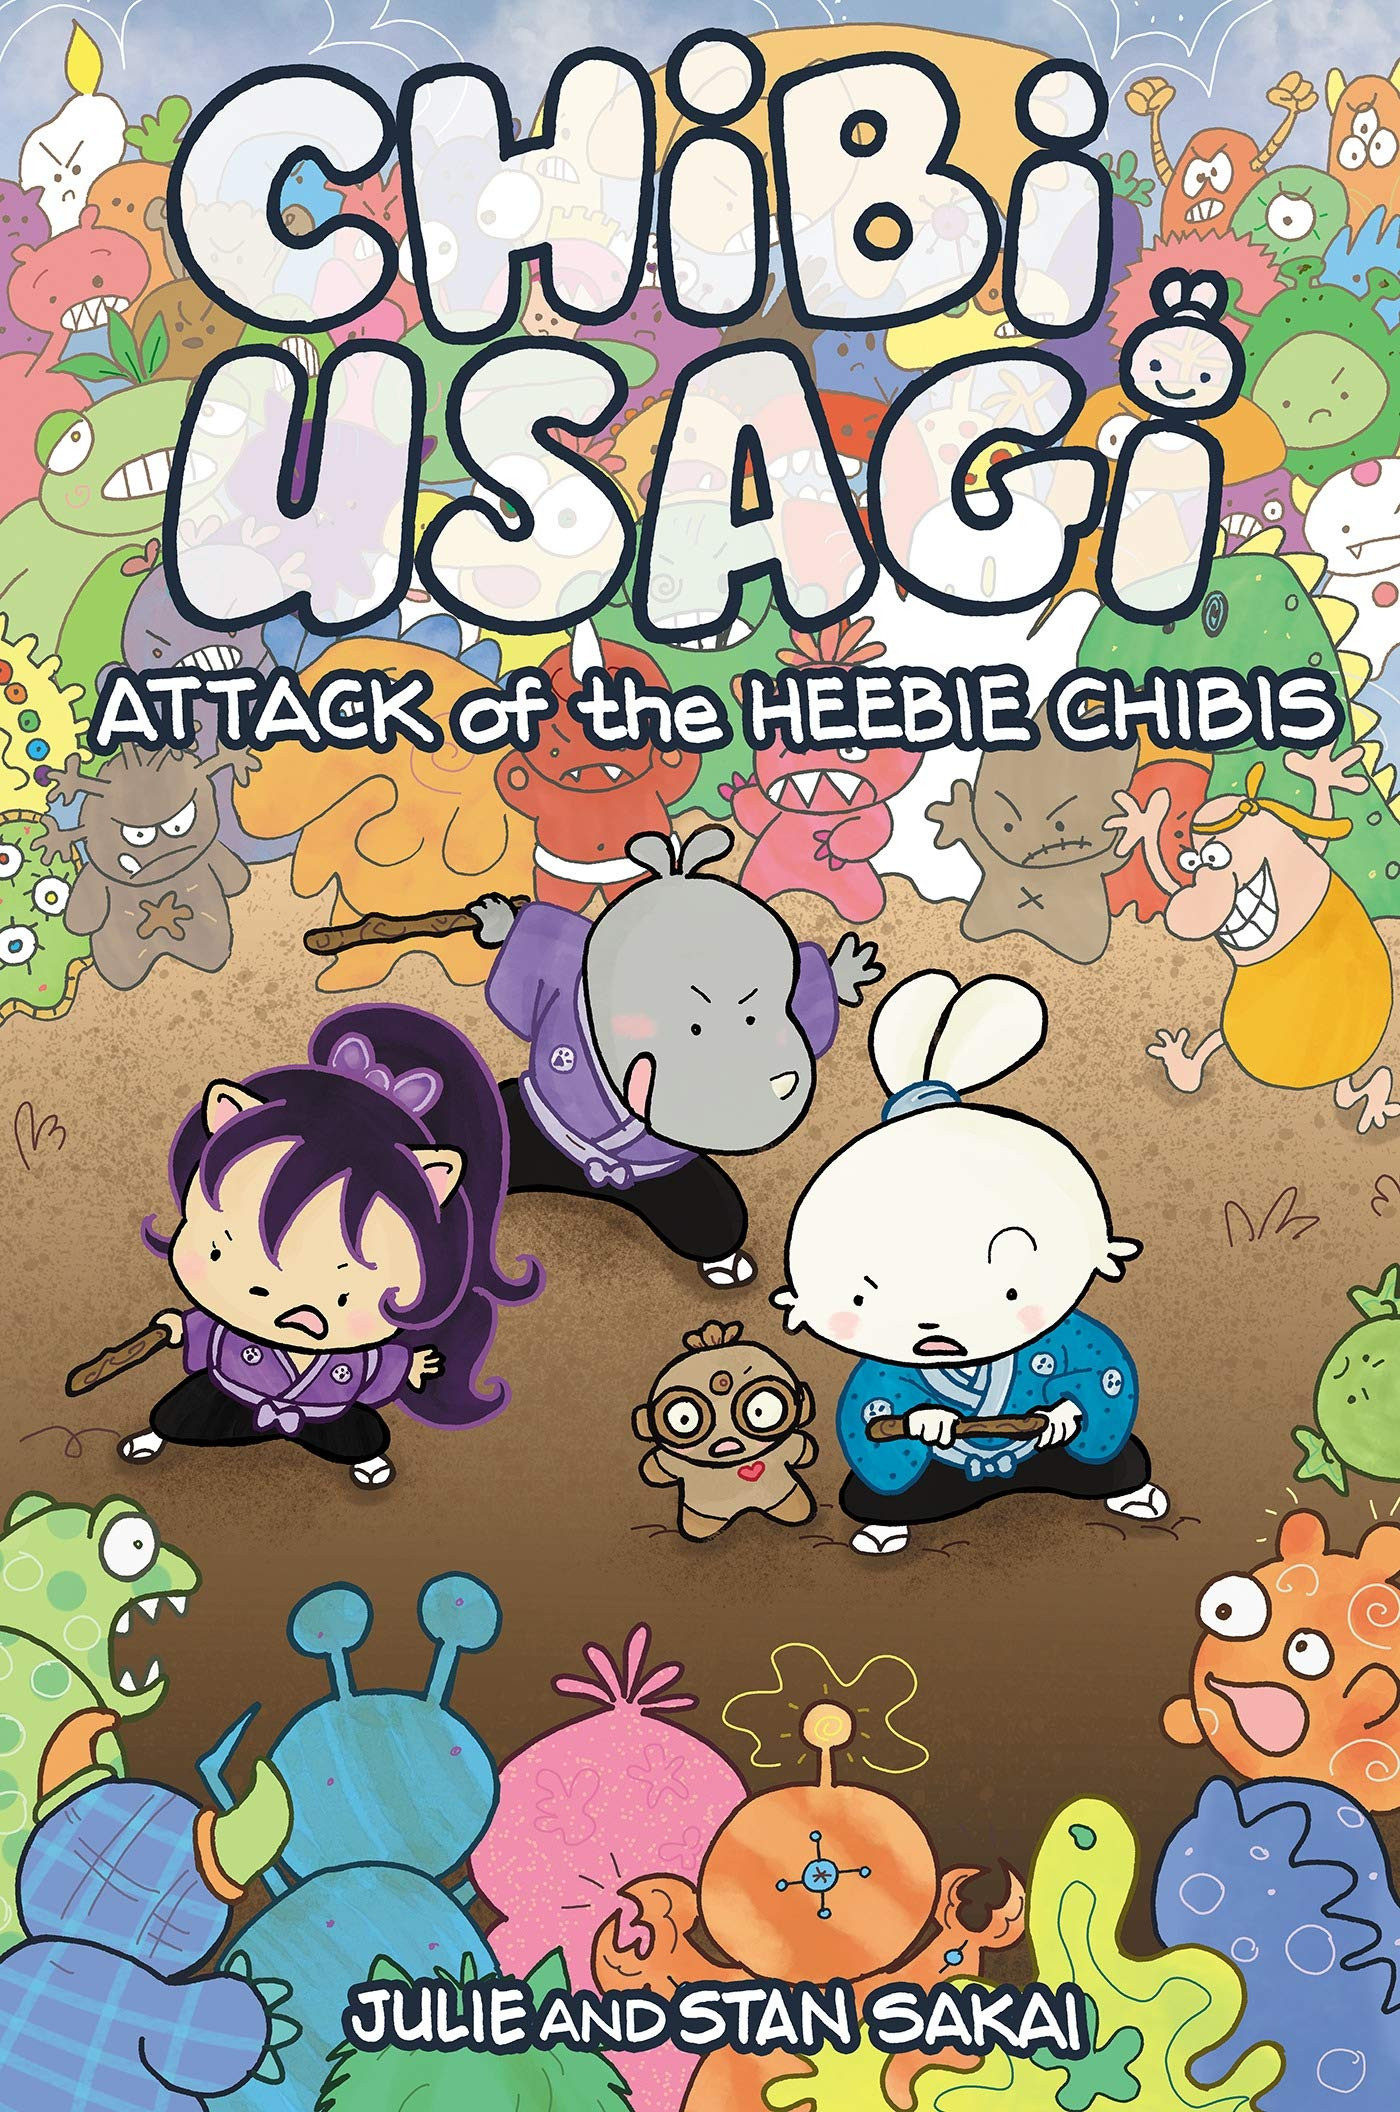 Chibi Usagi - Attack of the Heebie Chibis